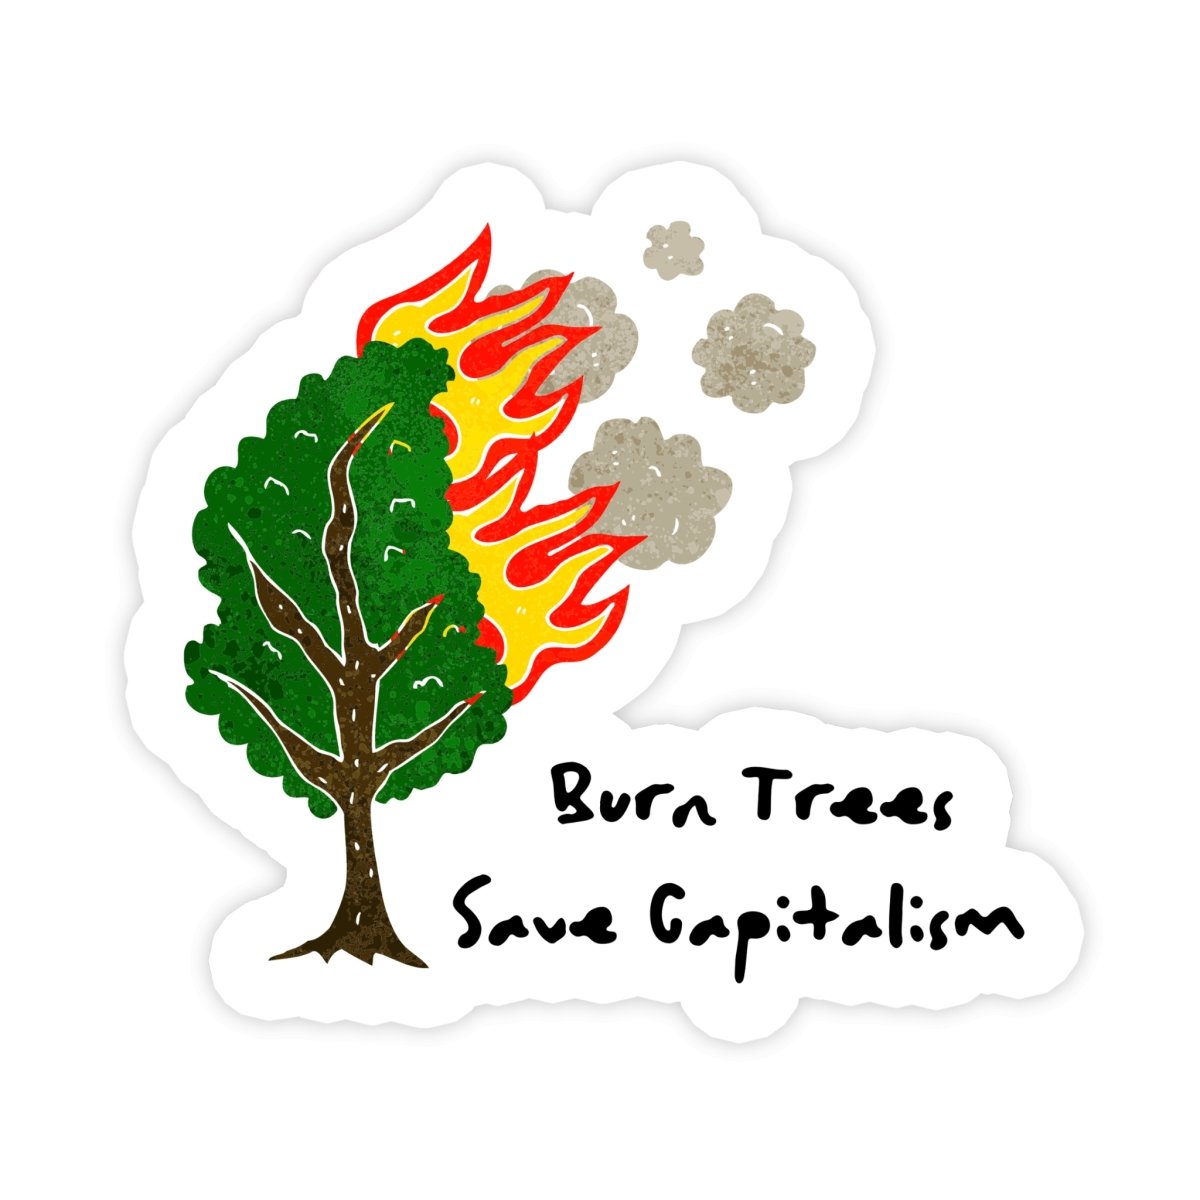 Burn Trees Save Capitalism Meme Sticker - stickerbullBurn Trees Save Capitalism Meme StickerRetail StickerstickerbullstickerbullBurnTrees_#257Burn Trees Save Capitalism Meme Sticker